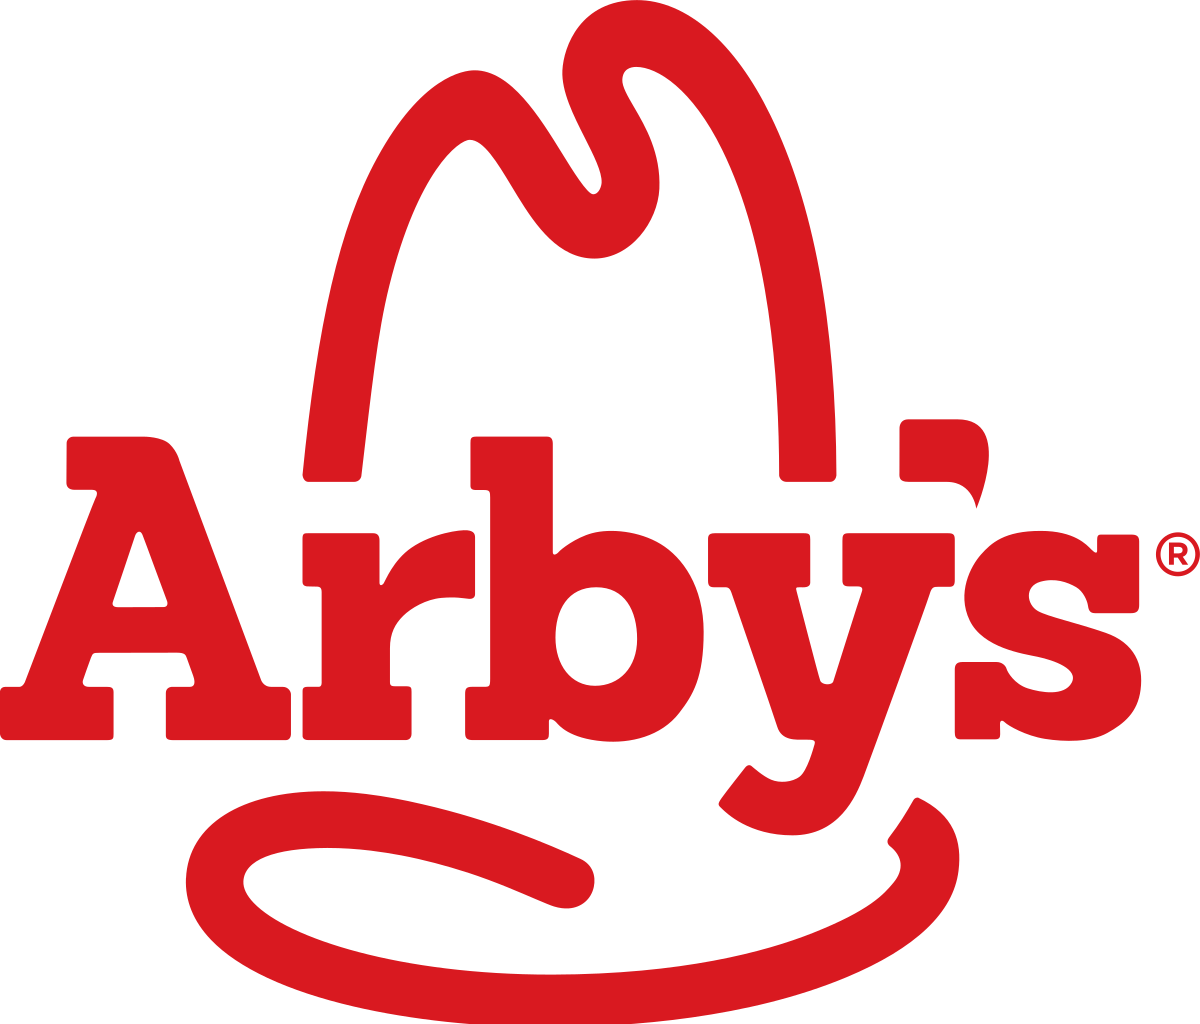 Junk Food Brand Logo - Arby's